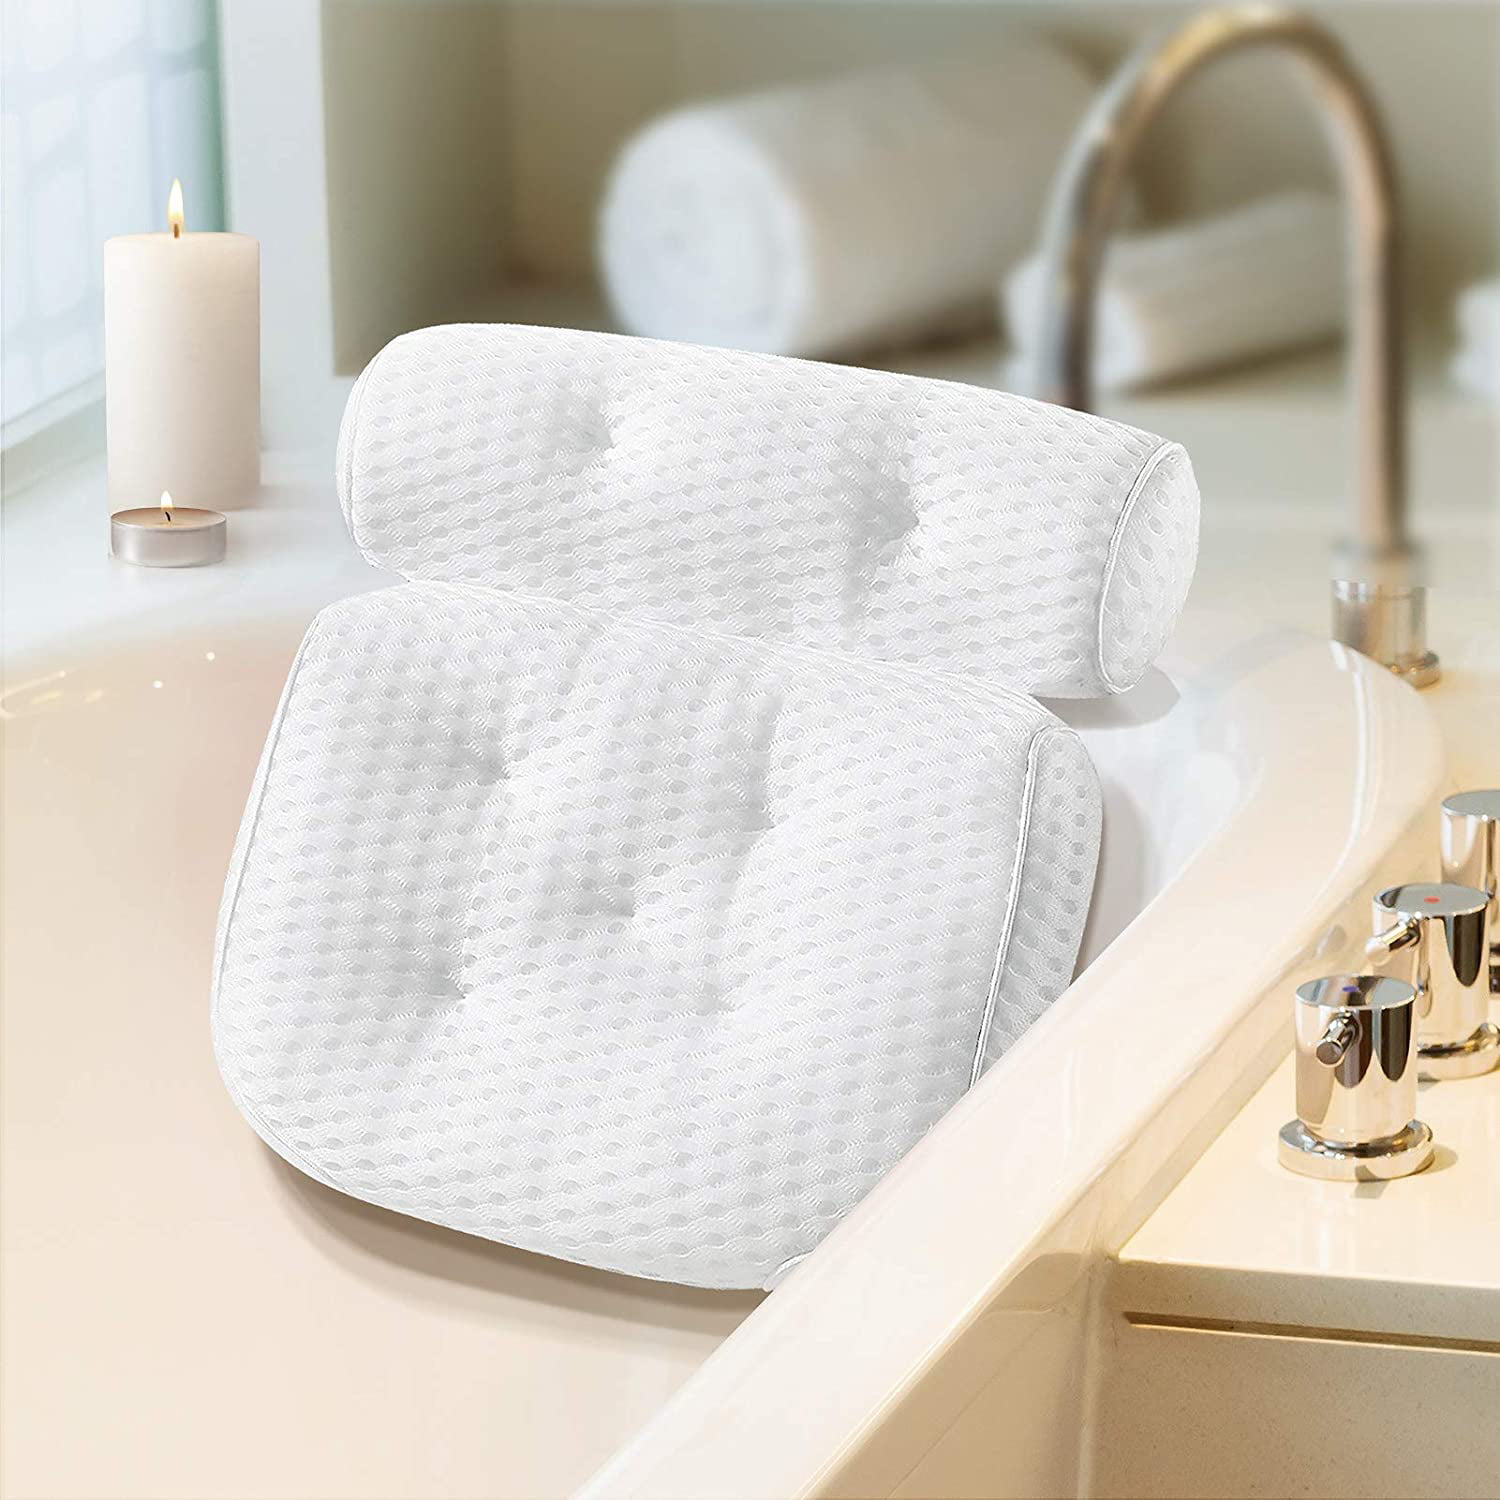 Head & Bath Pillow Spa Bathtub Pillow Ergonomic Bathtub Cushion For Neck 